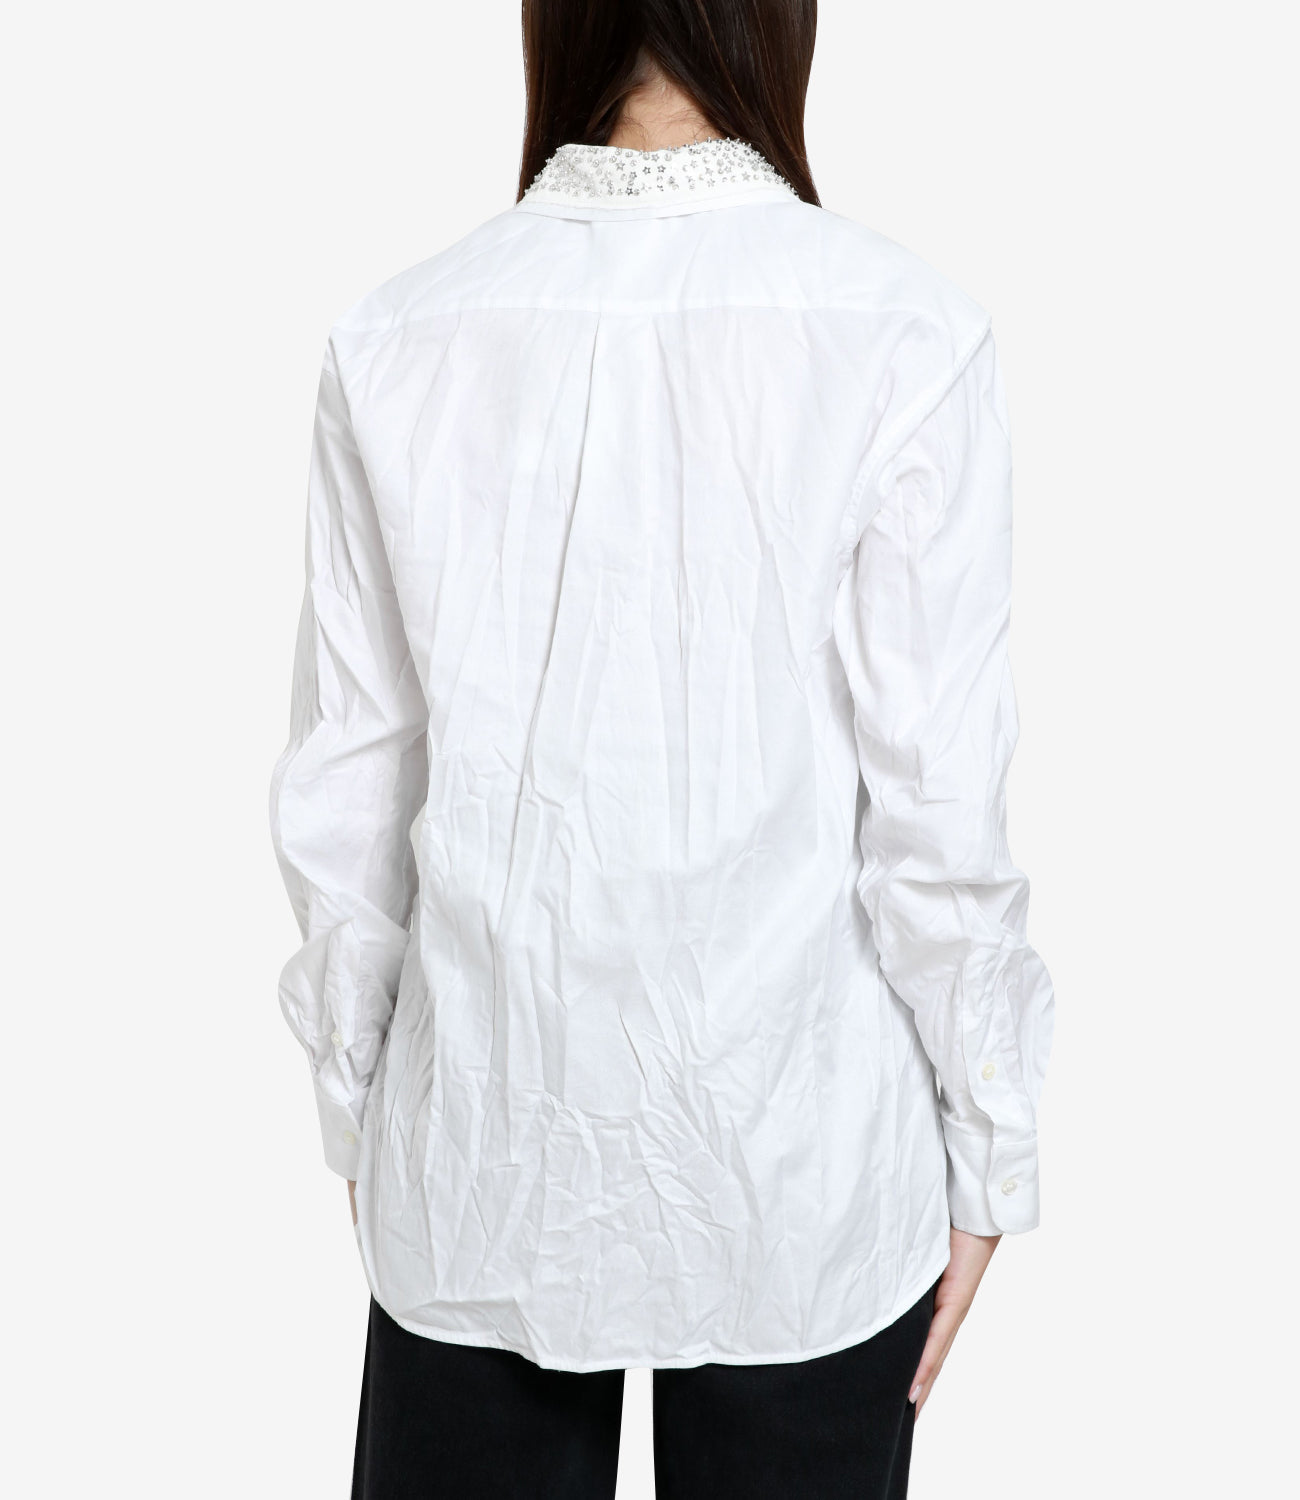 N 21 | White Shirt